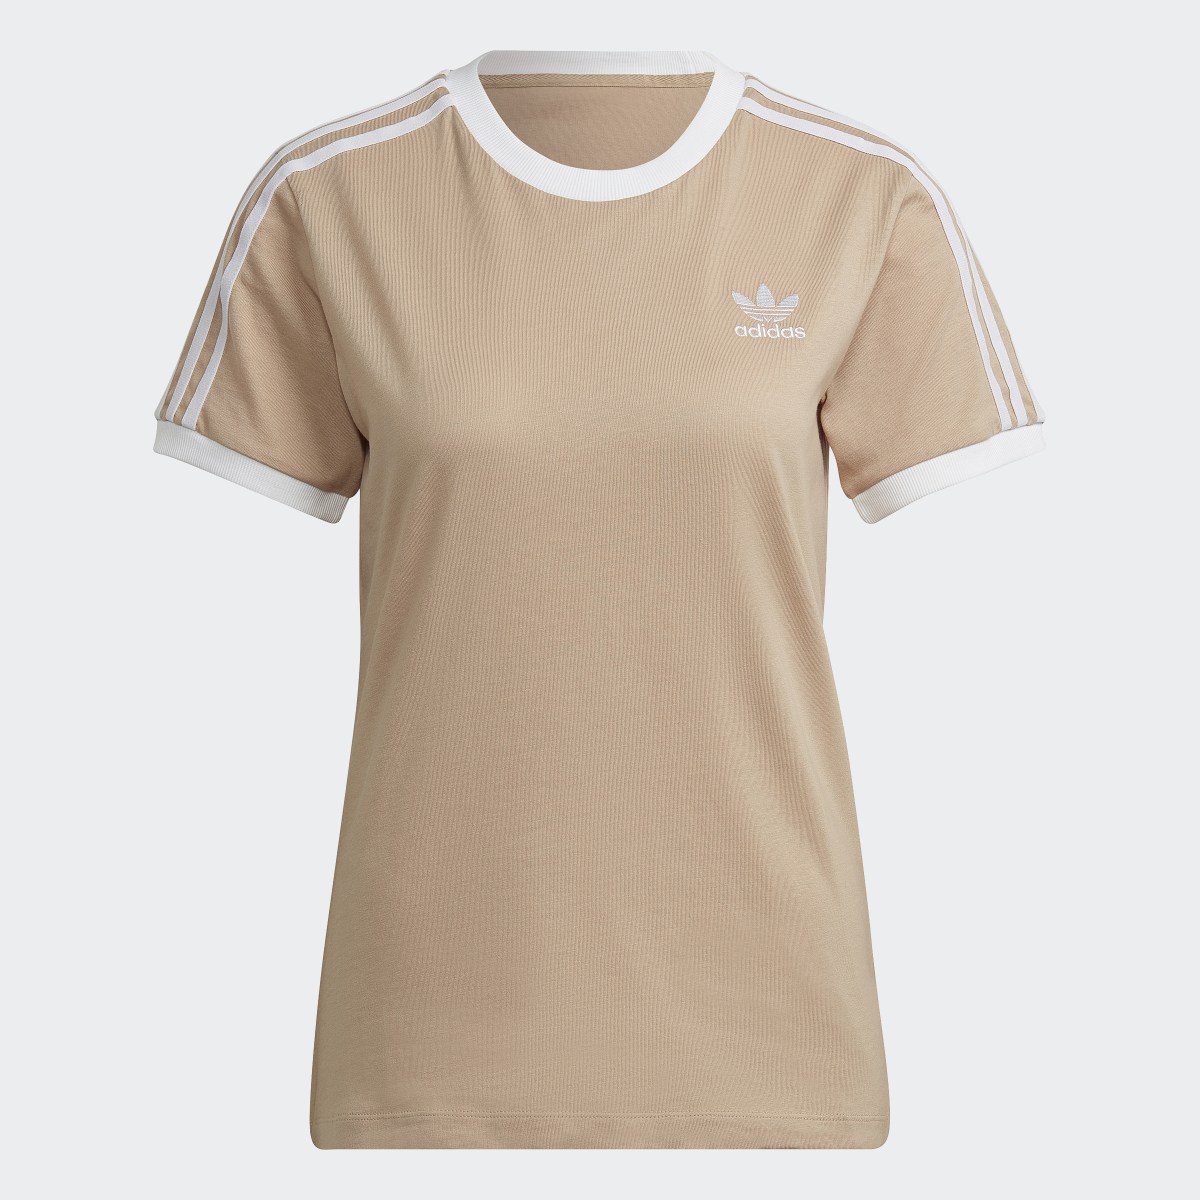 Adidas T-shirt adicolor Classics 3-Stripes. 5